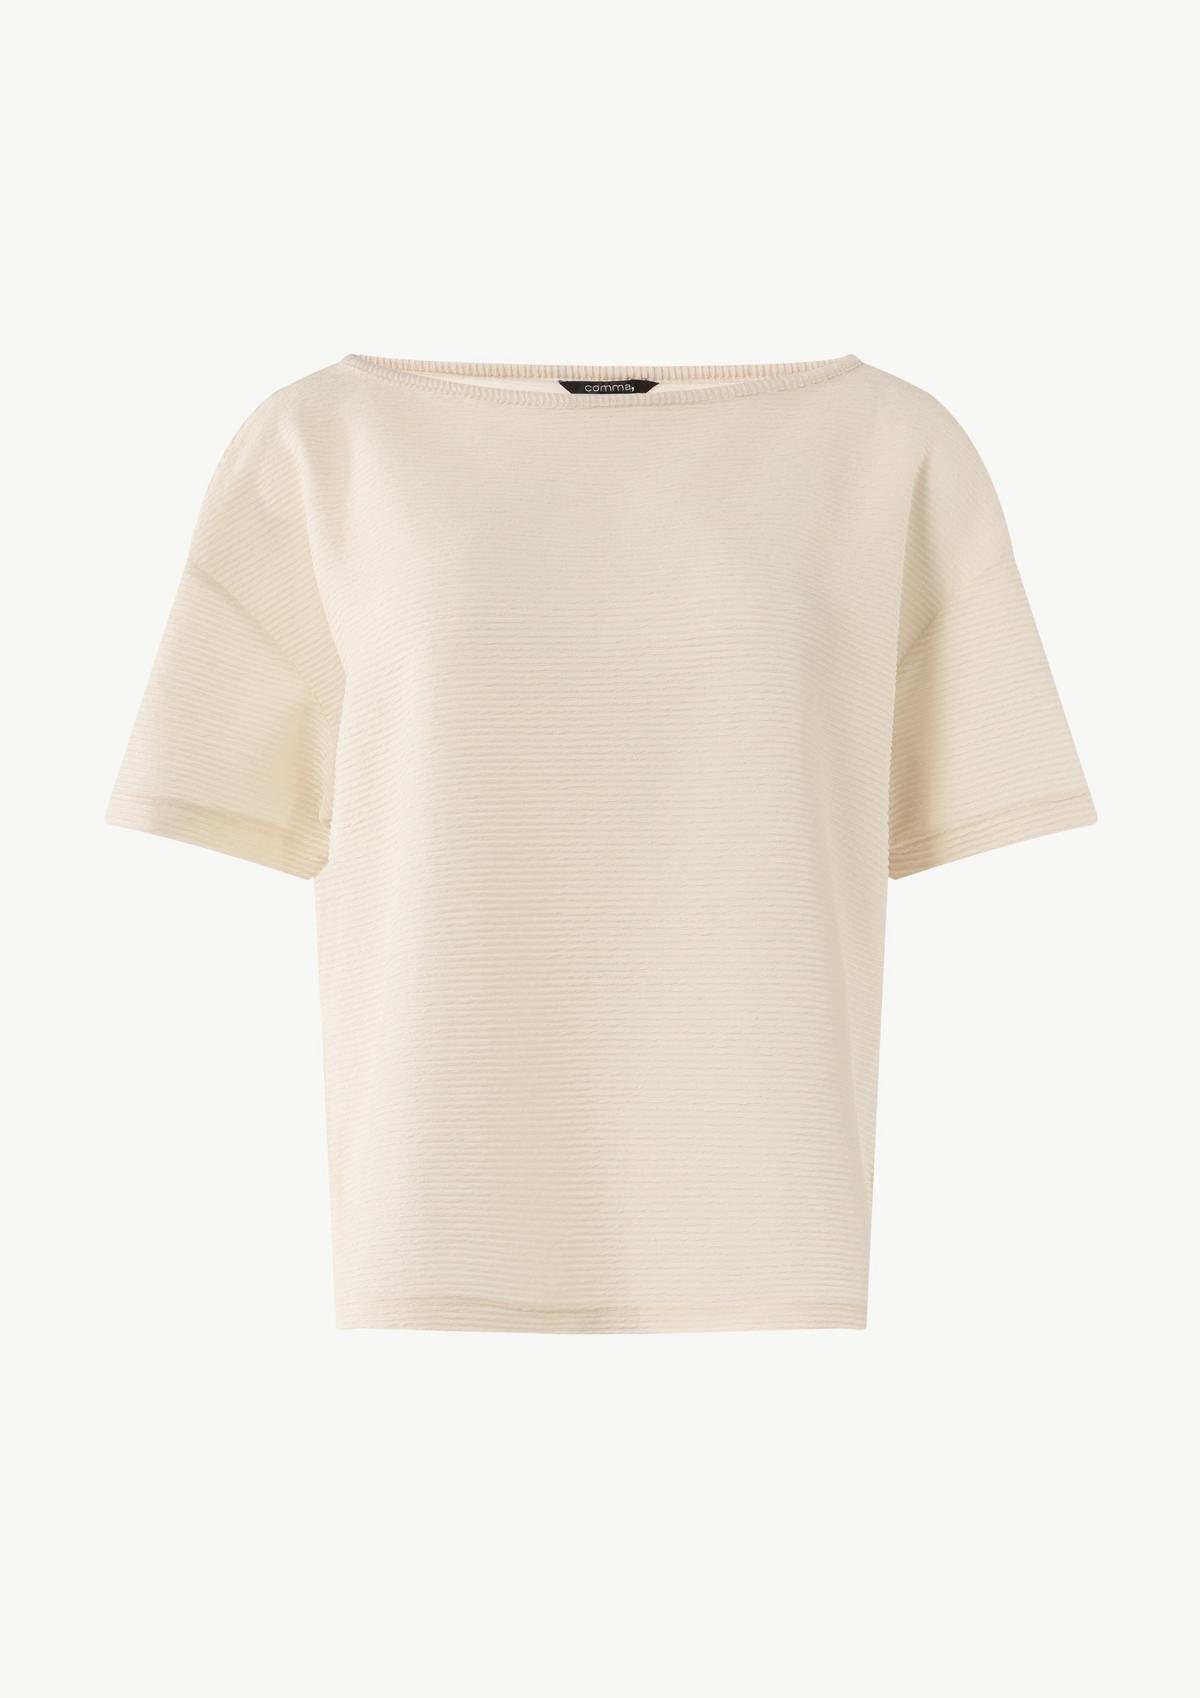 Boxy fine knit top with a bateau neckline - light beige | Comma